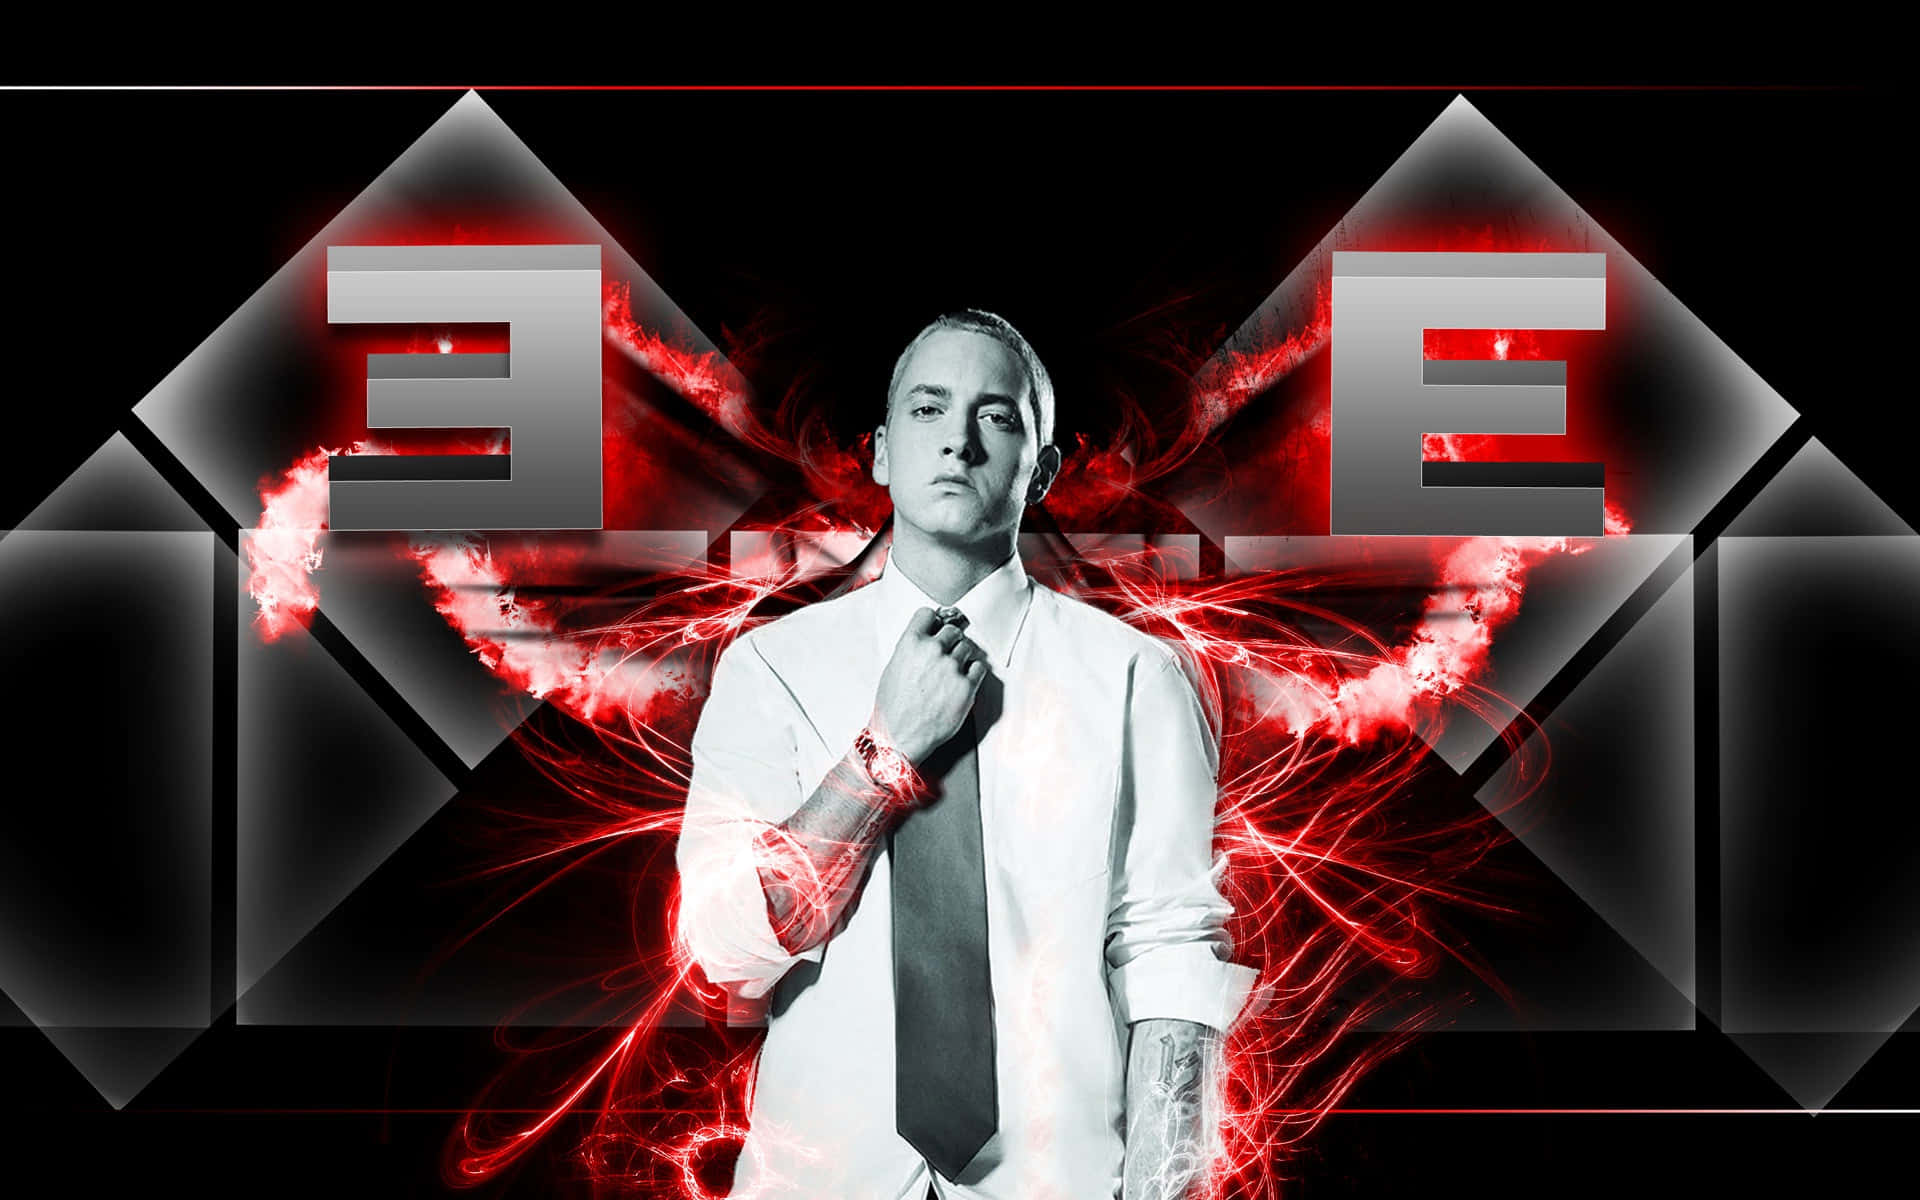 Eminem1920 X 1200 Baggrund